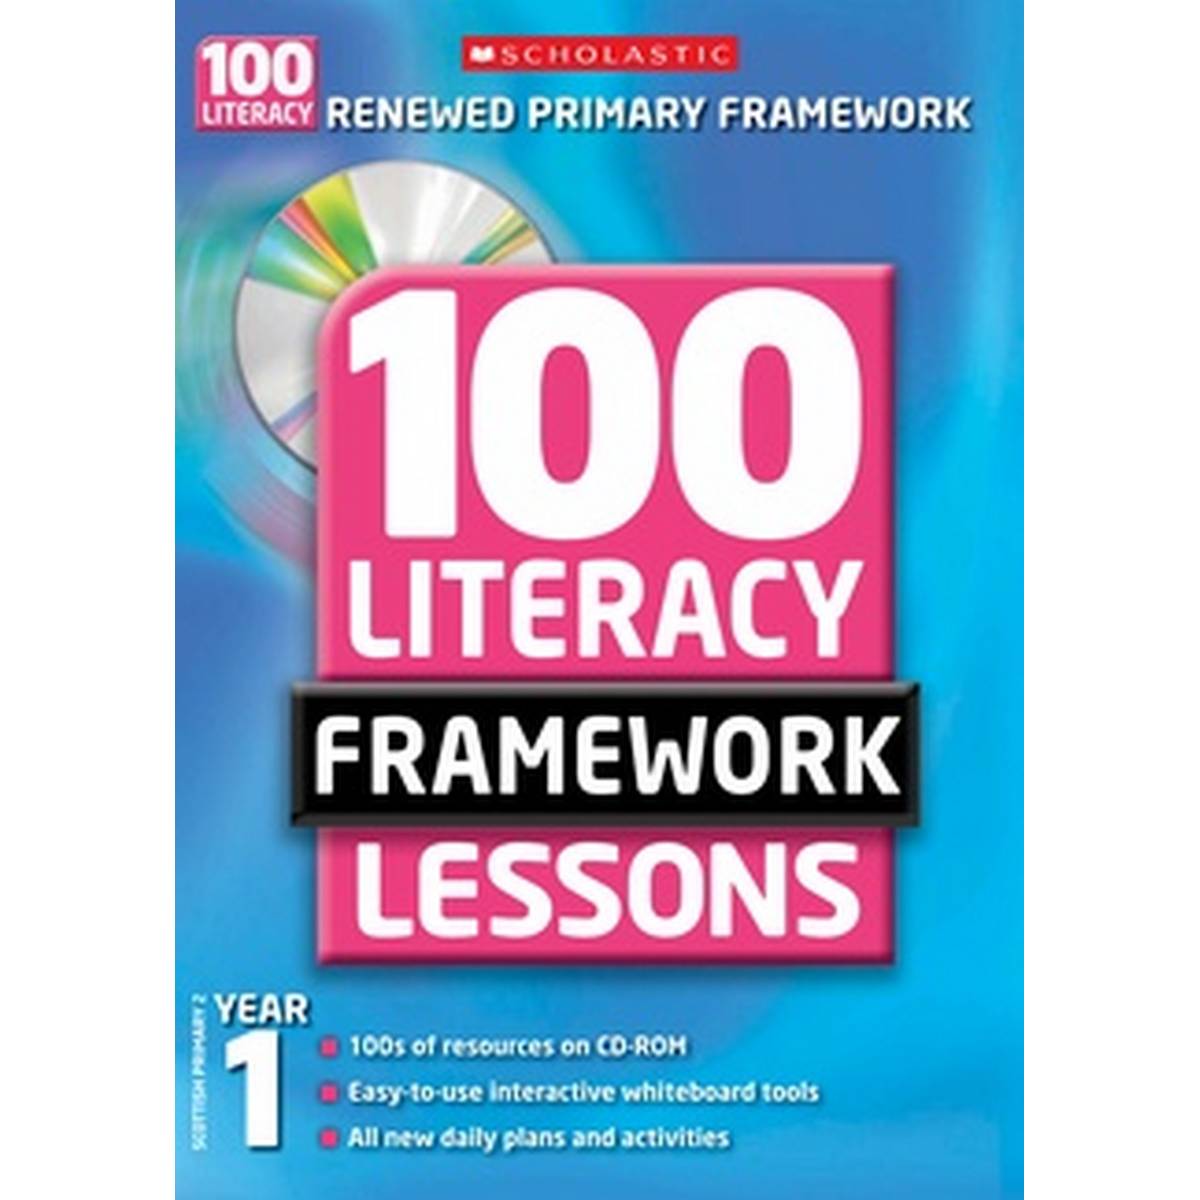 100 Literacy Framework Lessons: Year 1